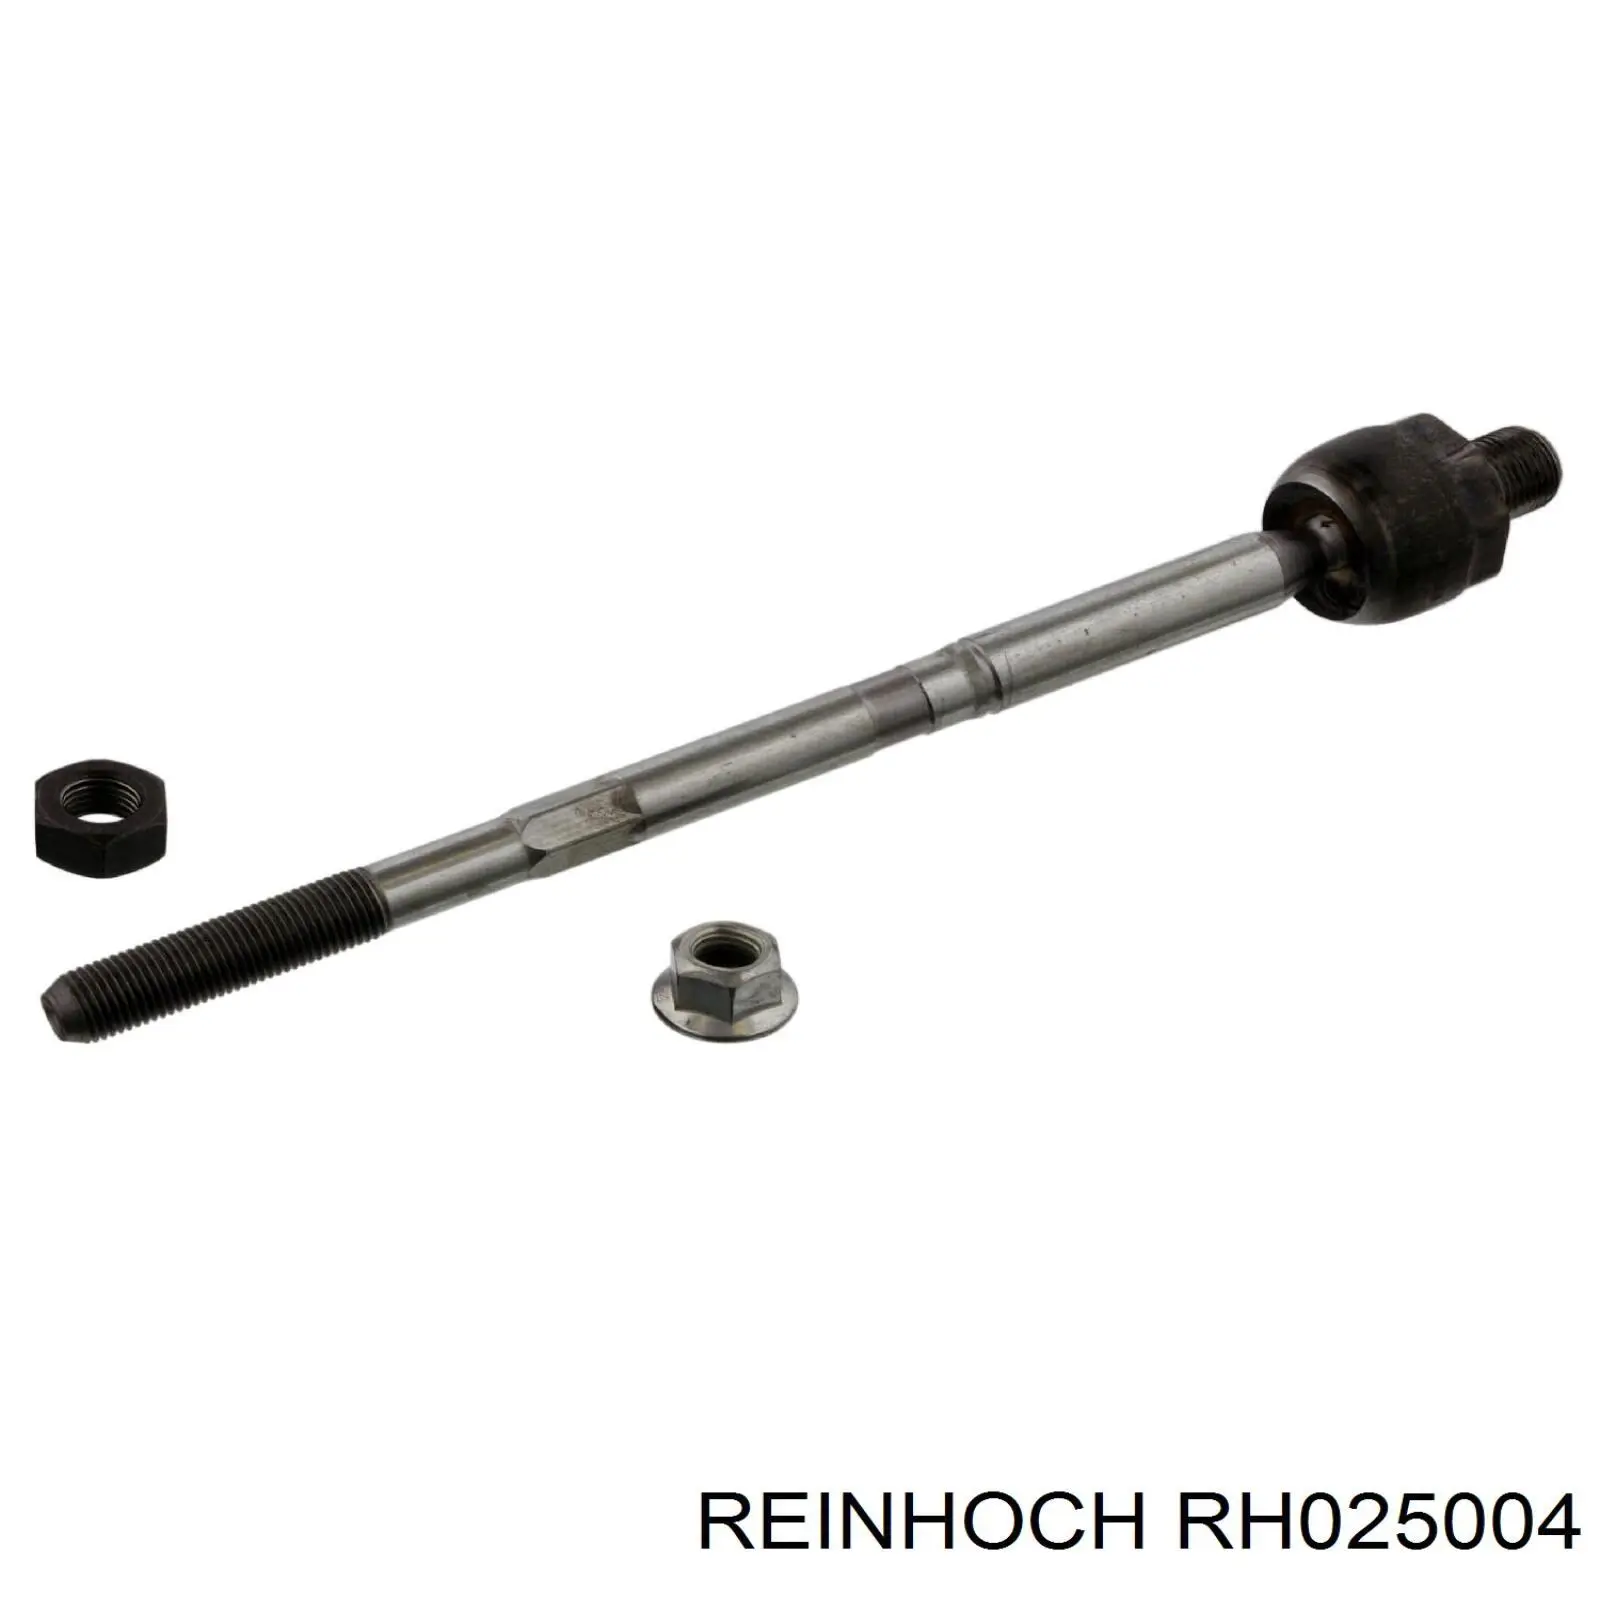 RH025004 Reinhoch barra de acoplamiento